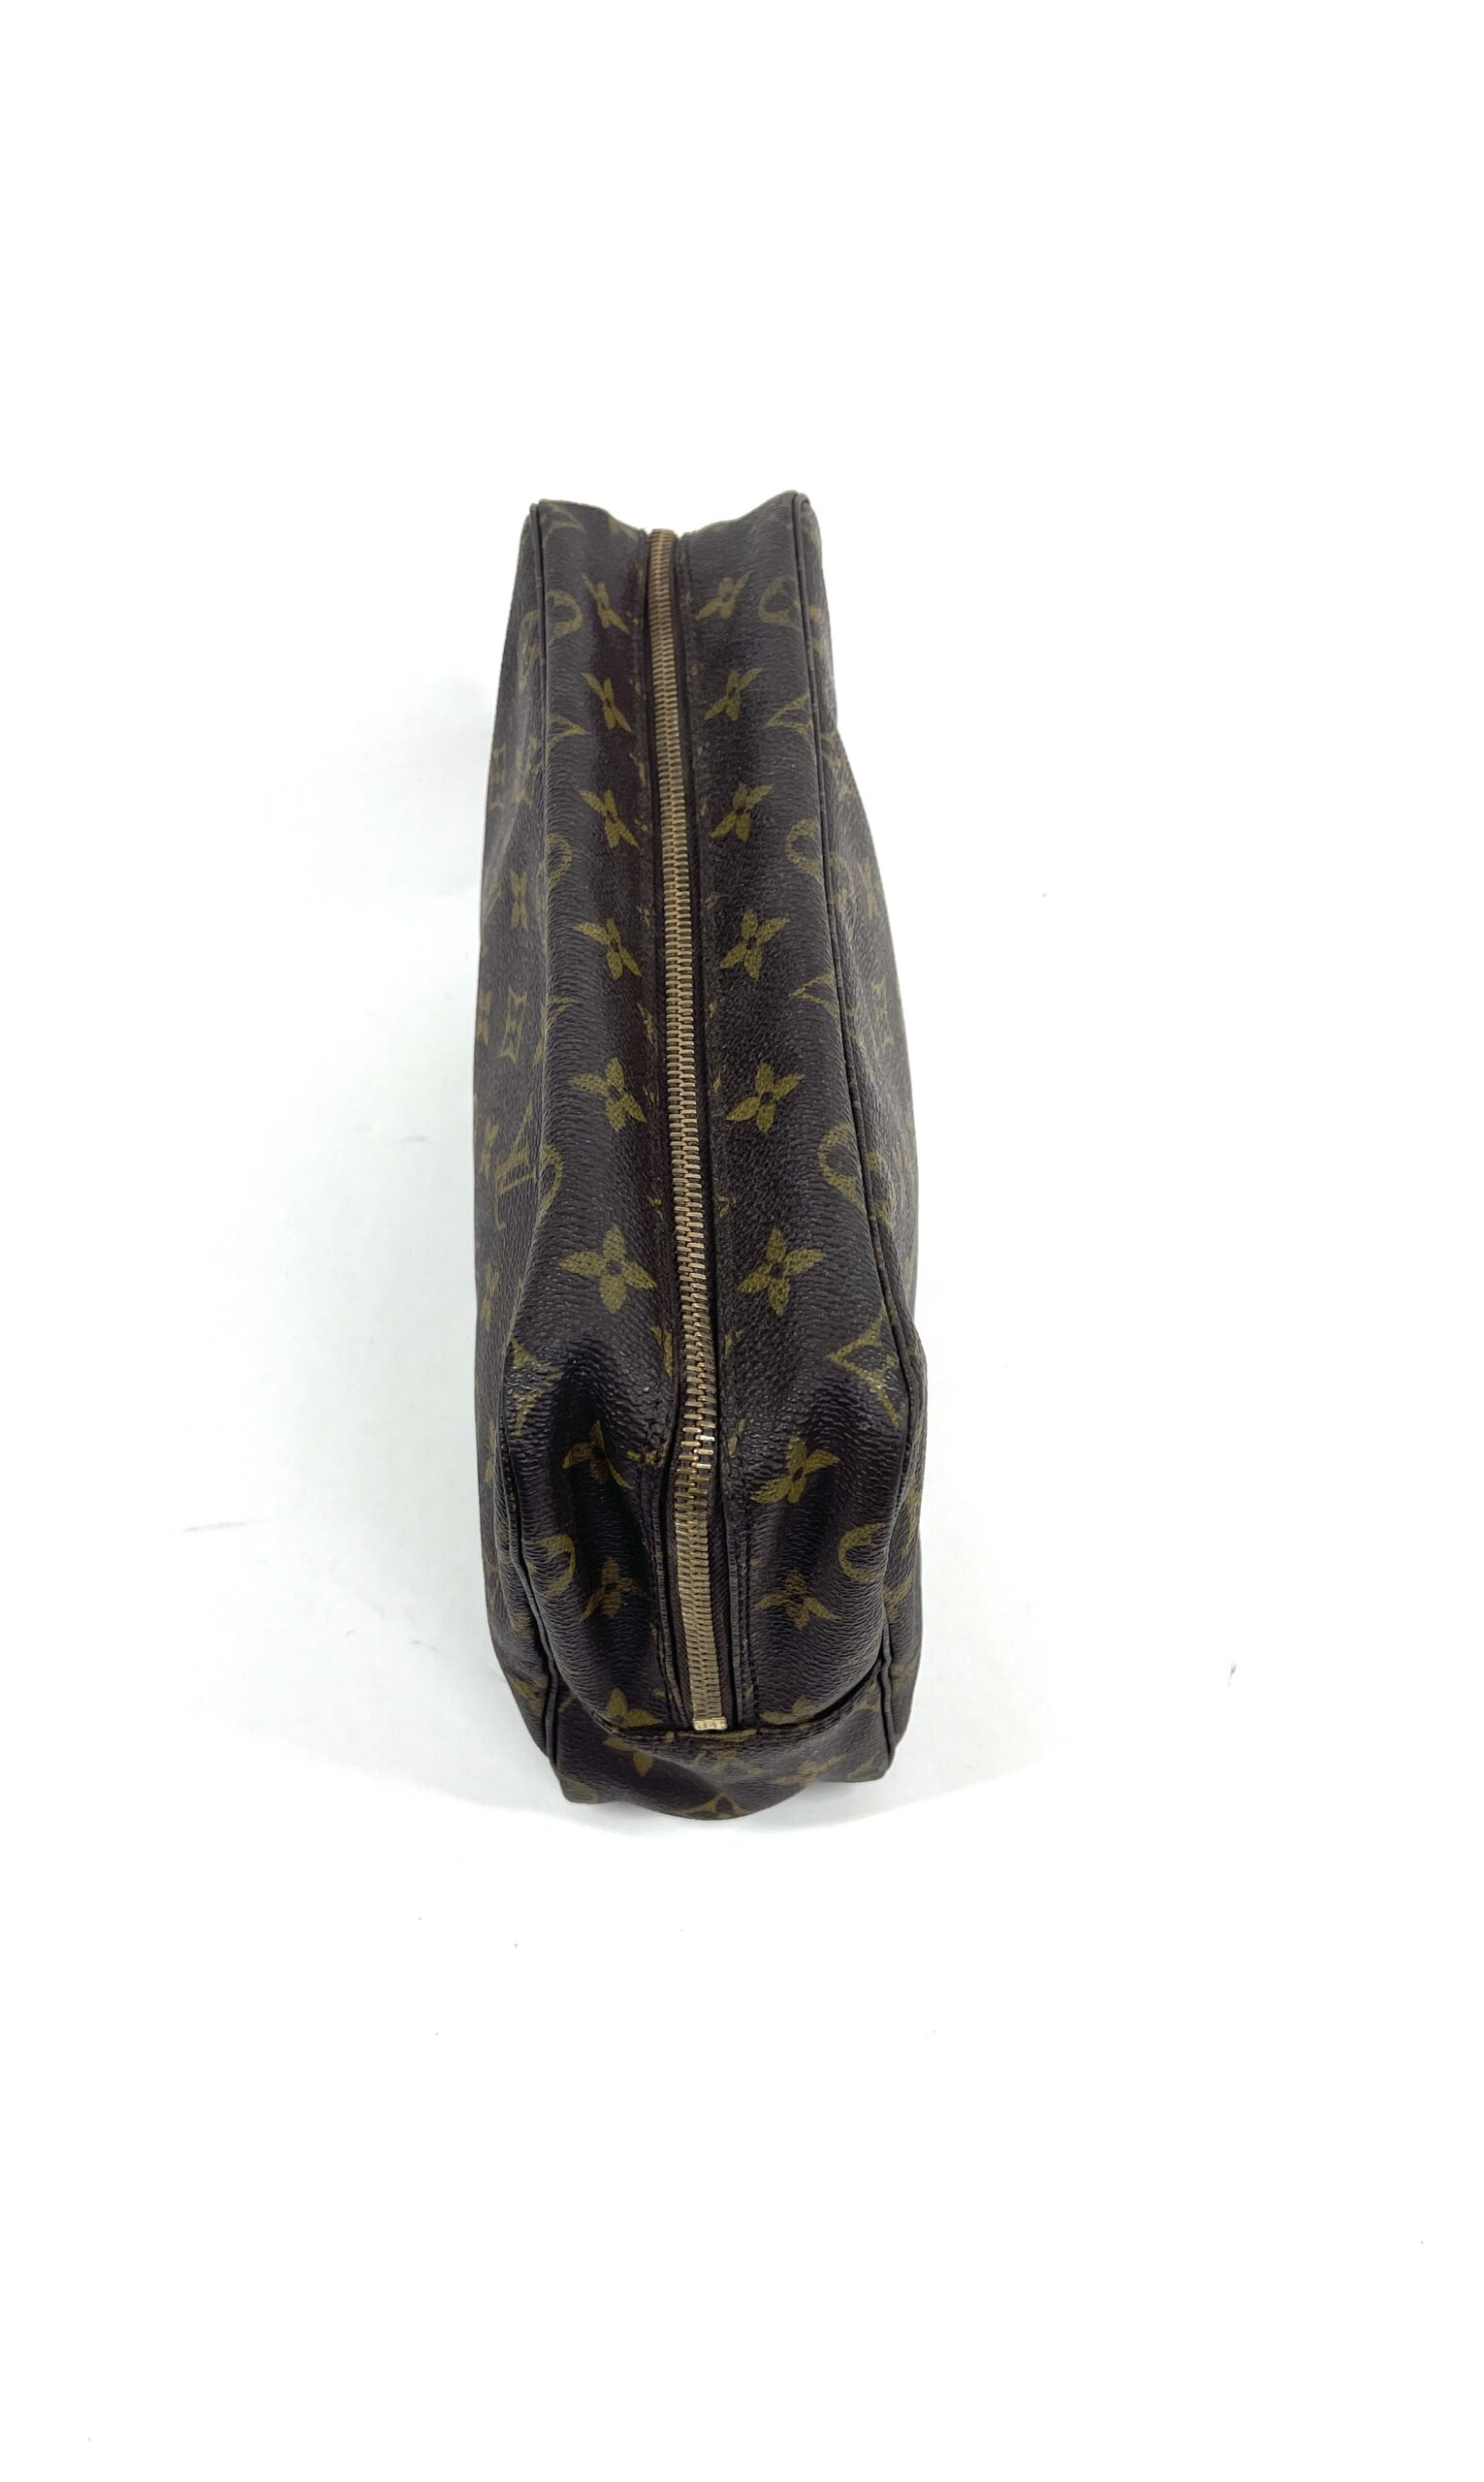 Louis Vuitton toiletry bag, trousse 28, monogram coated …